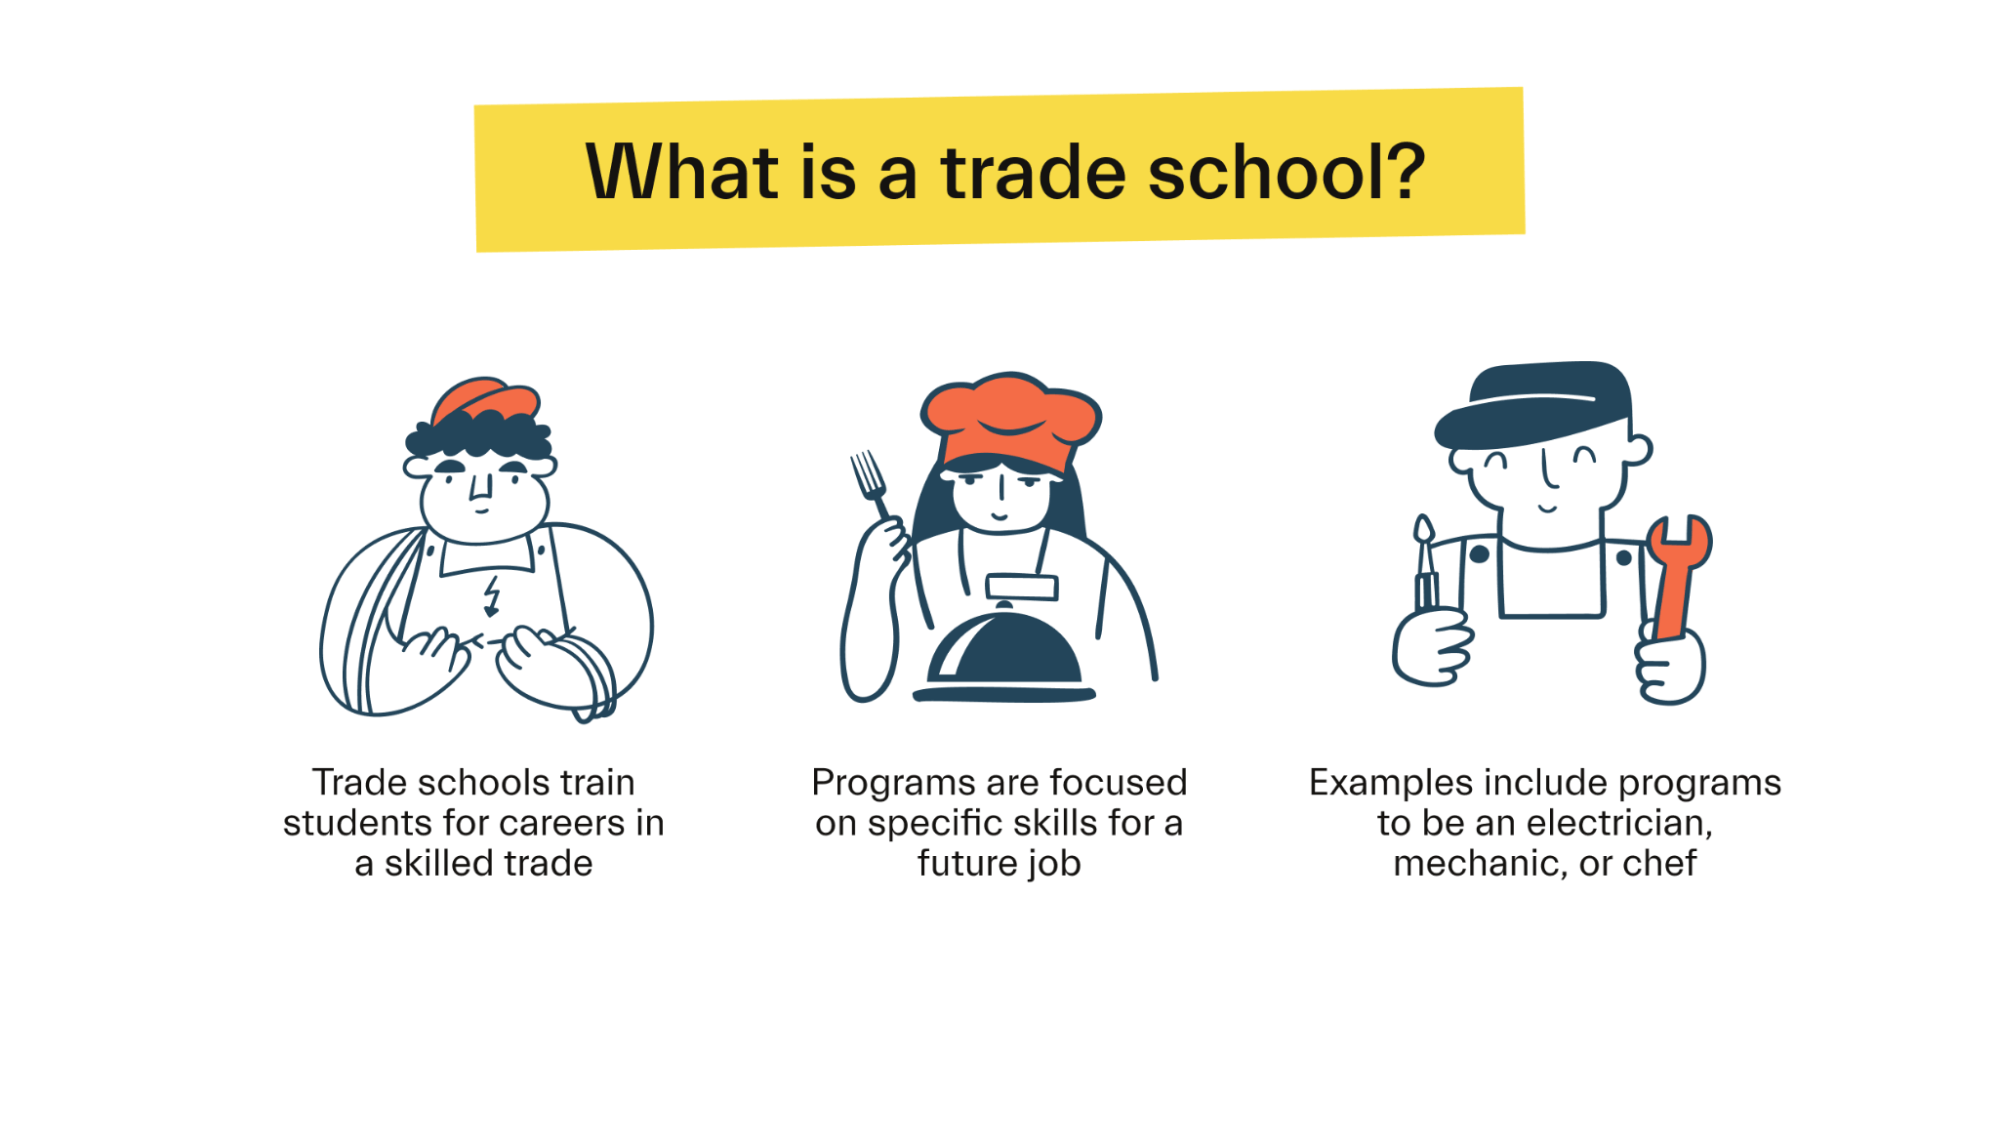 do you get homework in trade school